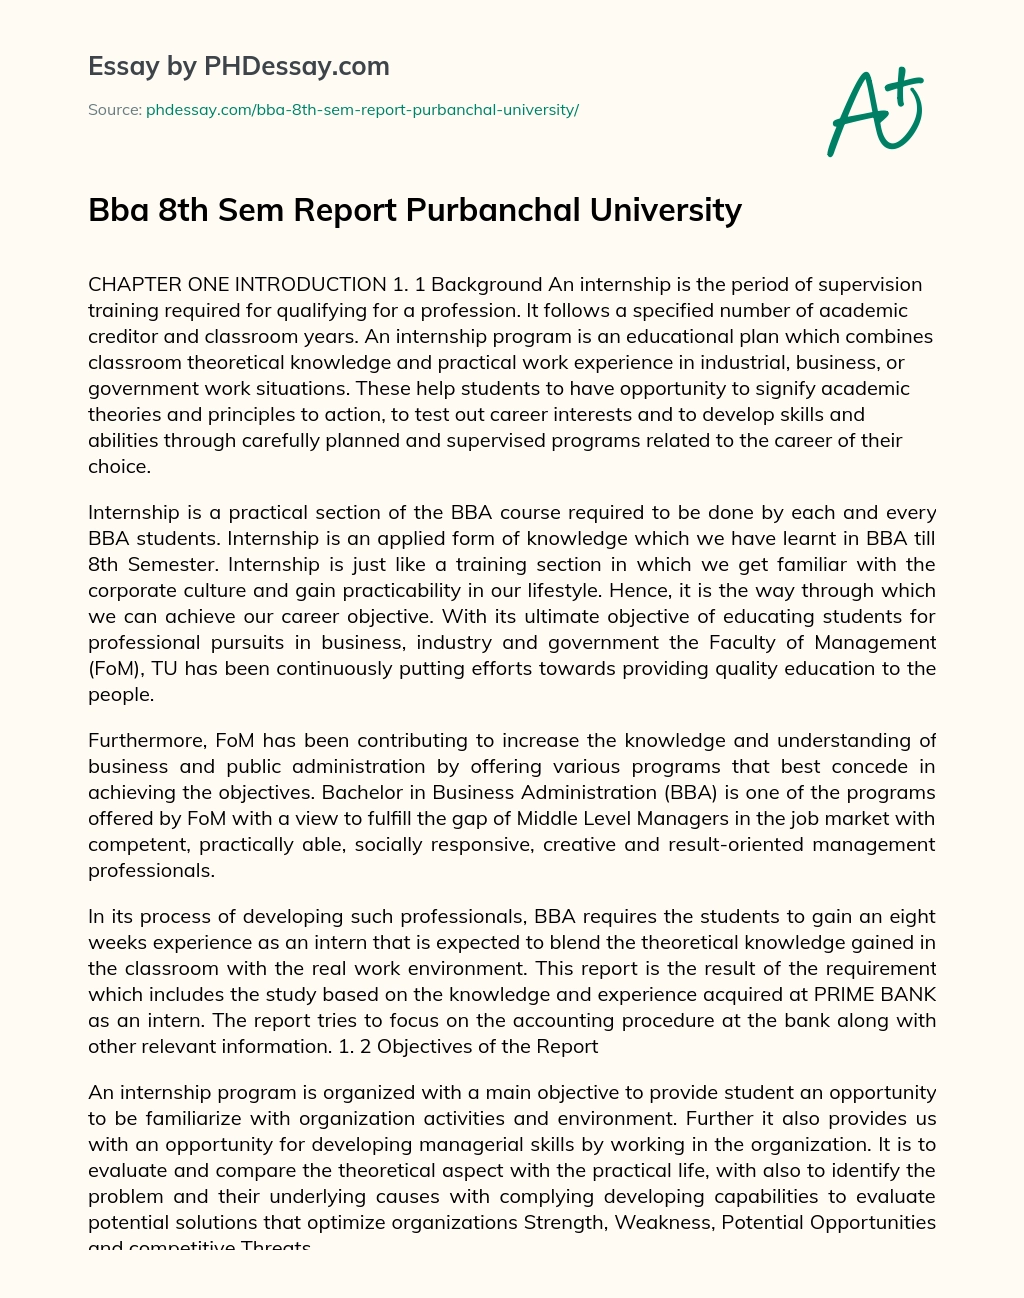 Bba 8th Sem Report Purbanchal University essay